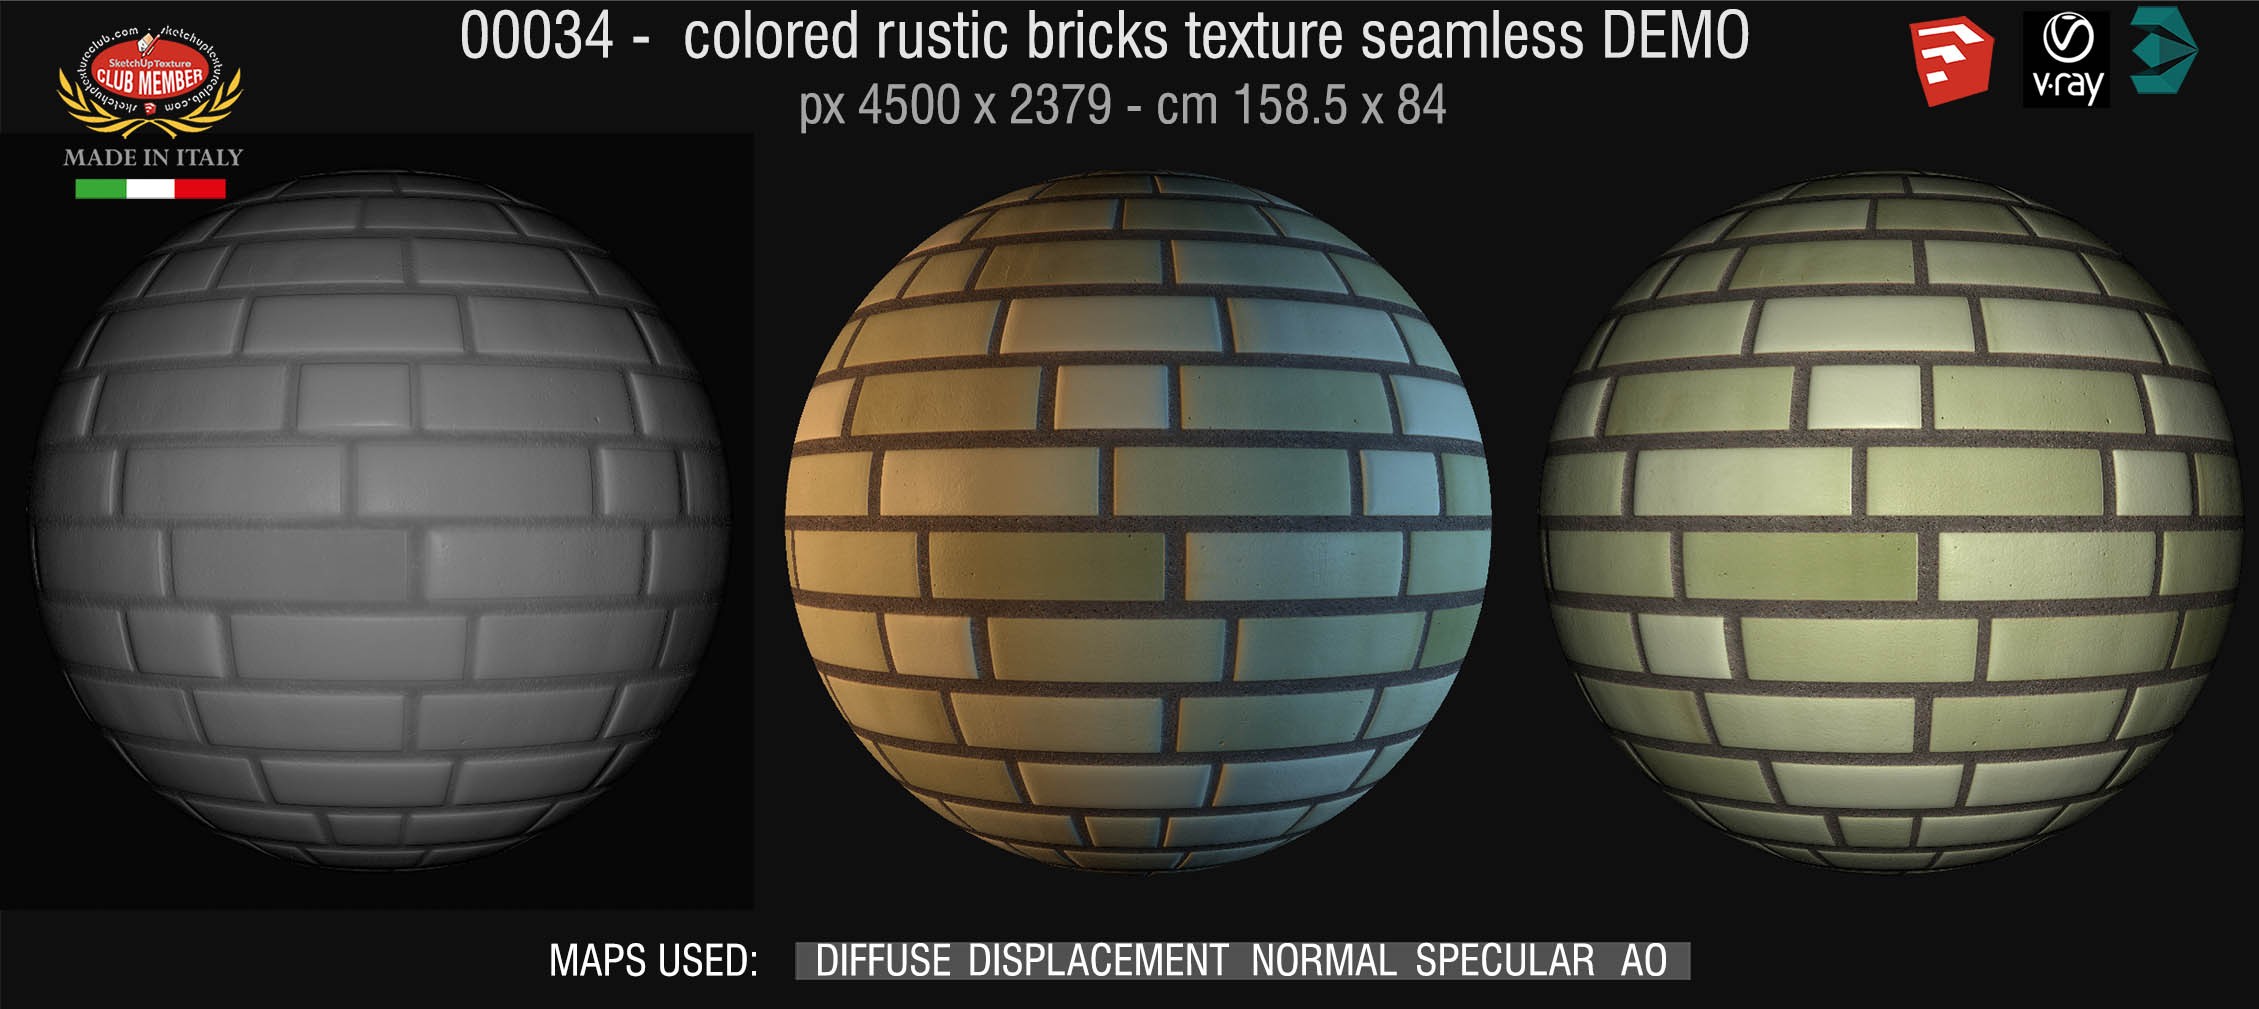 00034 colored rustic bricks texture seamless + maps DEMO